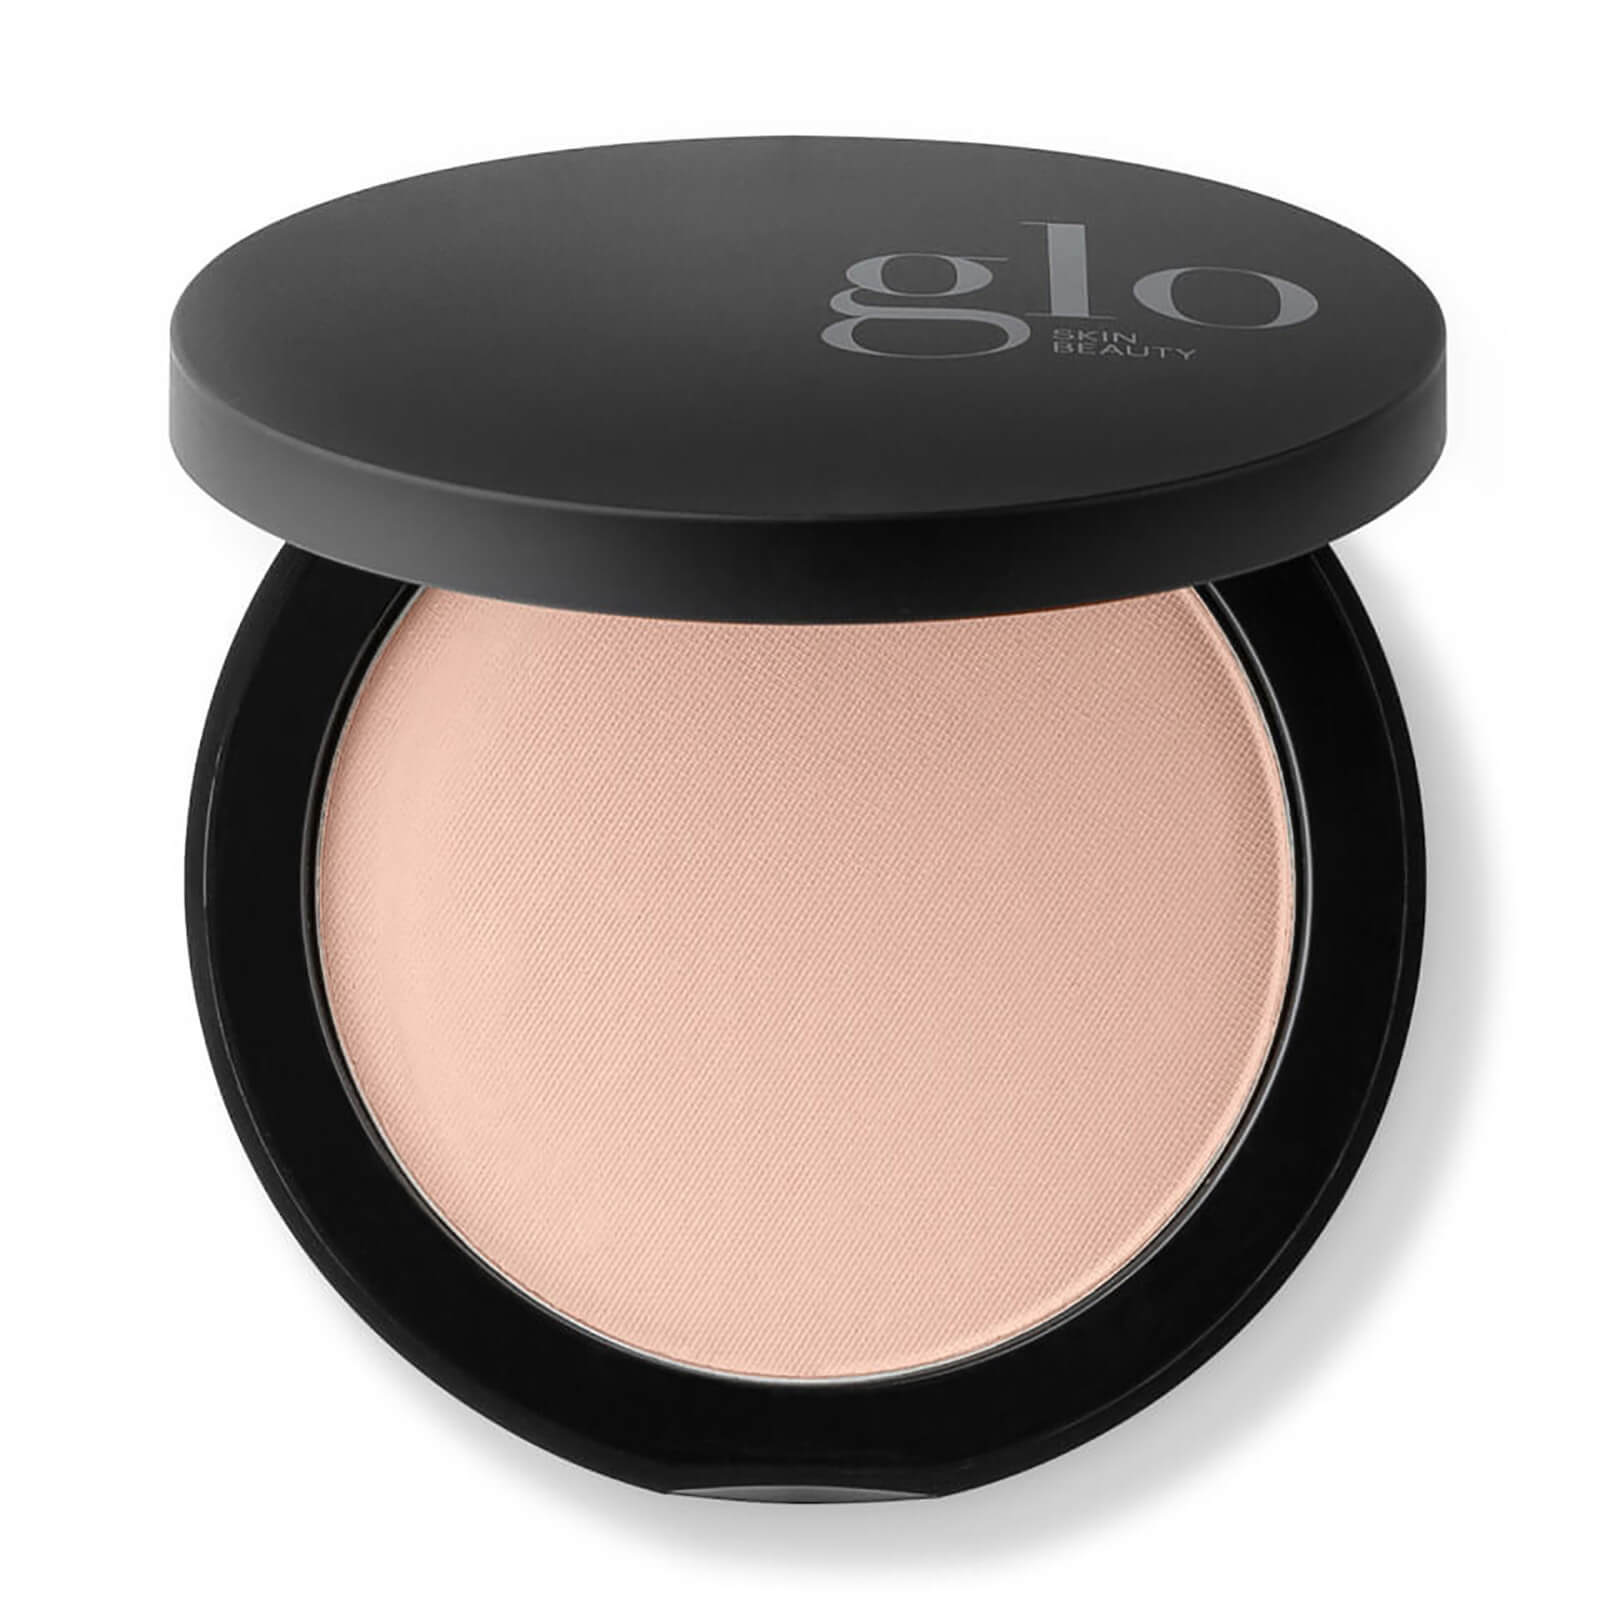 Glo Skin Beauty Pressed Base Powder Foundation (0.35 Oz.) In Beige Light